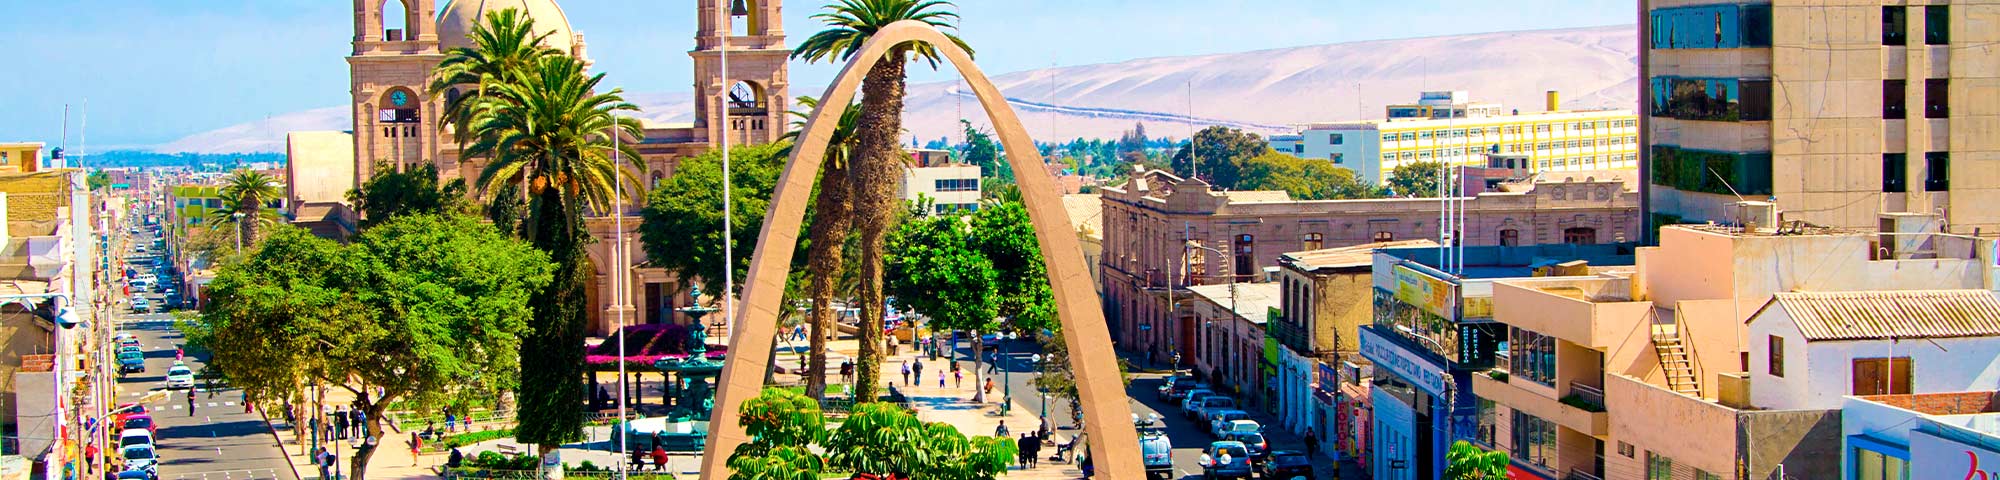 Tacna: Turismo se incrementa luego de la reapertura de la frontera con Chile